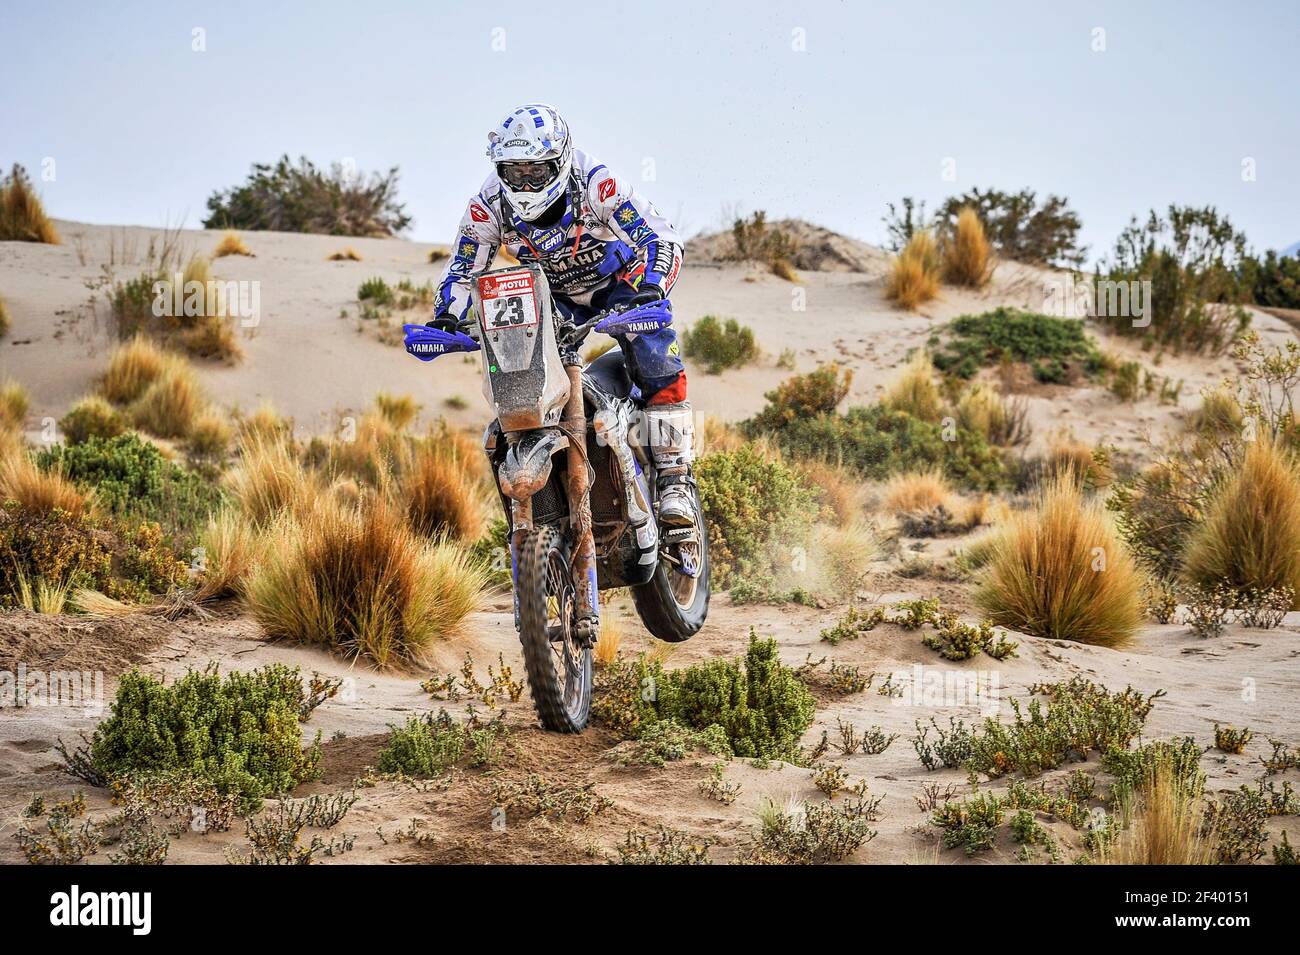 23 DE SOULTRAIT XAVIER (FRA), YAMAHA, Moto, Bike, Aktion während der Dakar 2018, Etappe 8 Uyuni nach Tupiza, Bolivien, januar 14 - Foto DPPI Stockfoto